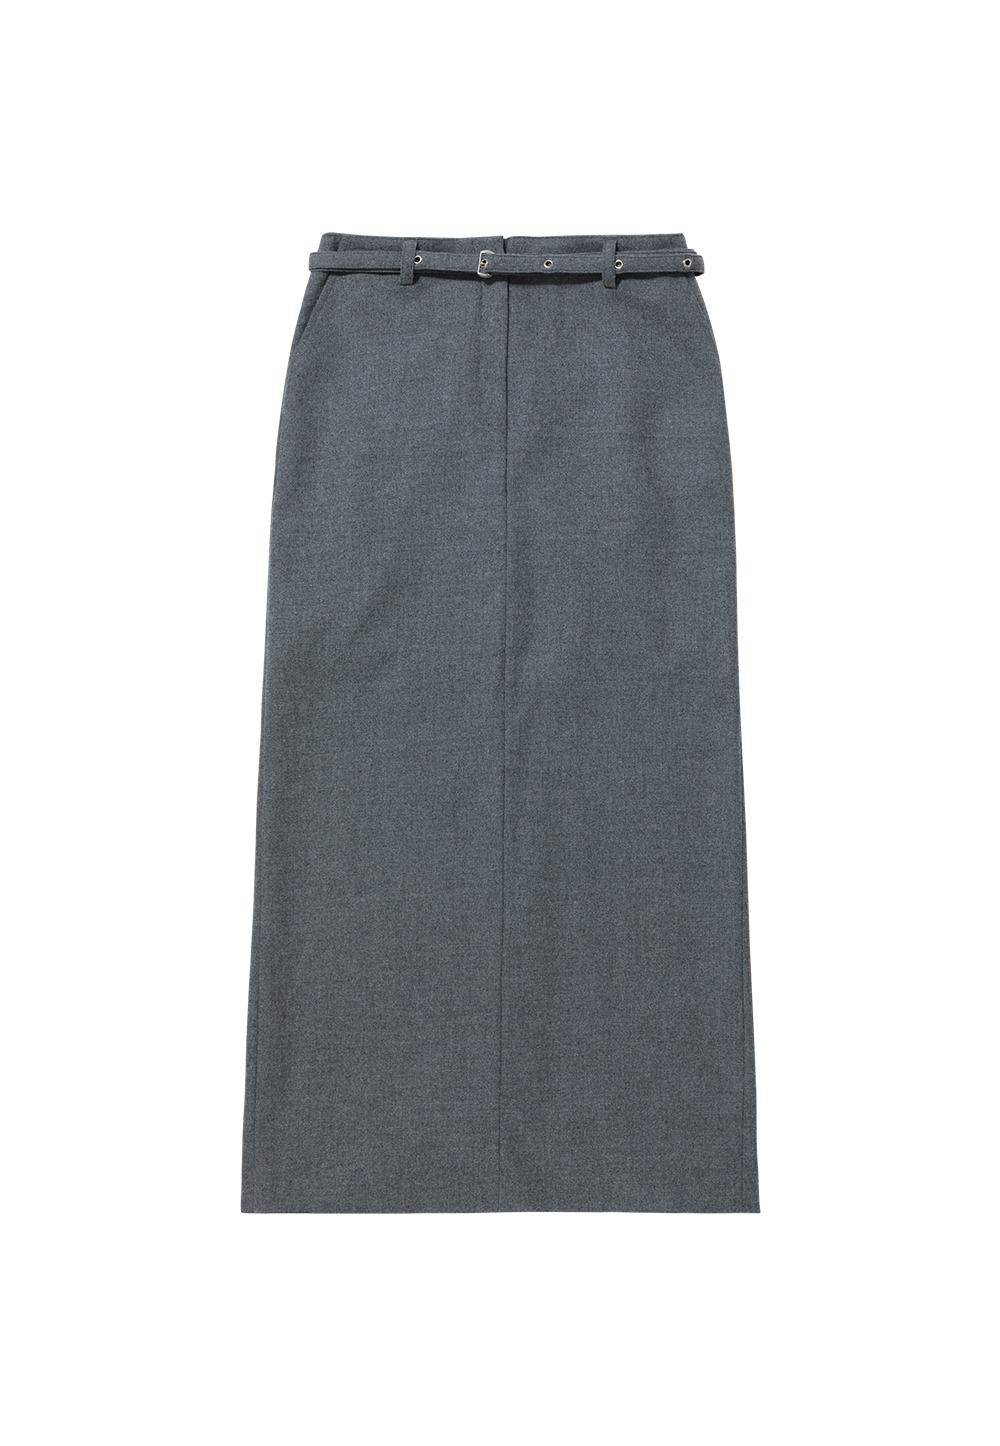 Long&amp;Lean skirt - GREY